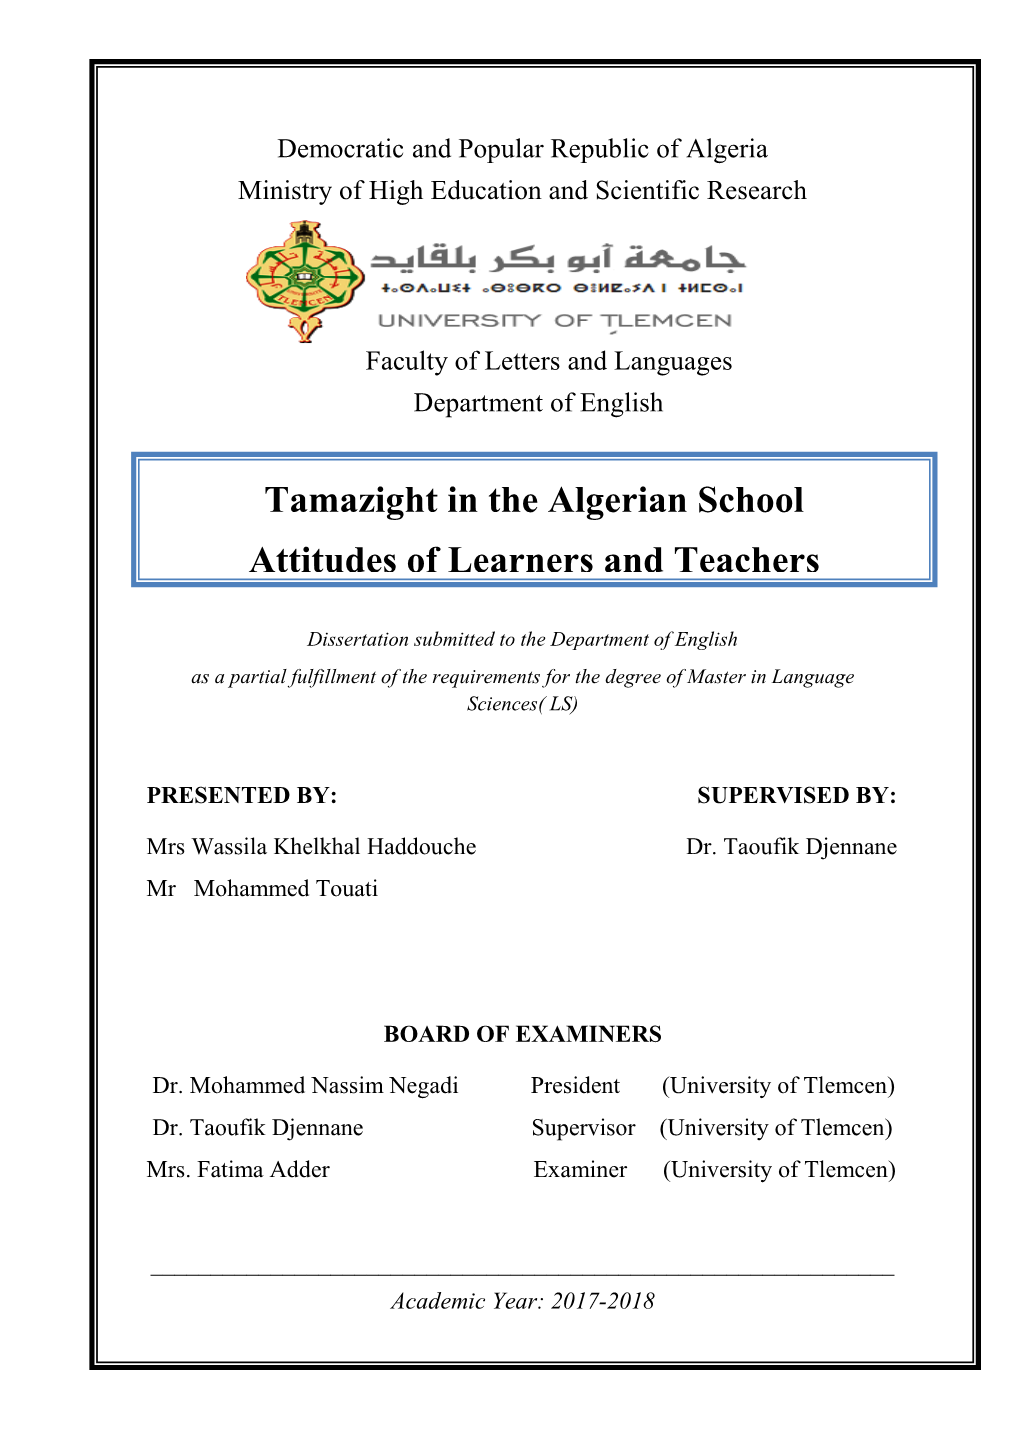 Tamazight in the Algerian School Attitudes of Learners and Teachers